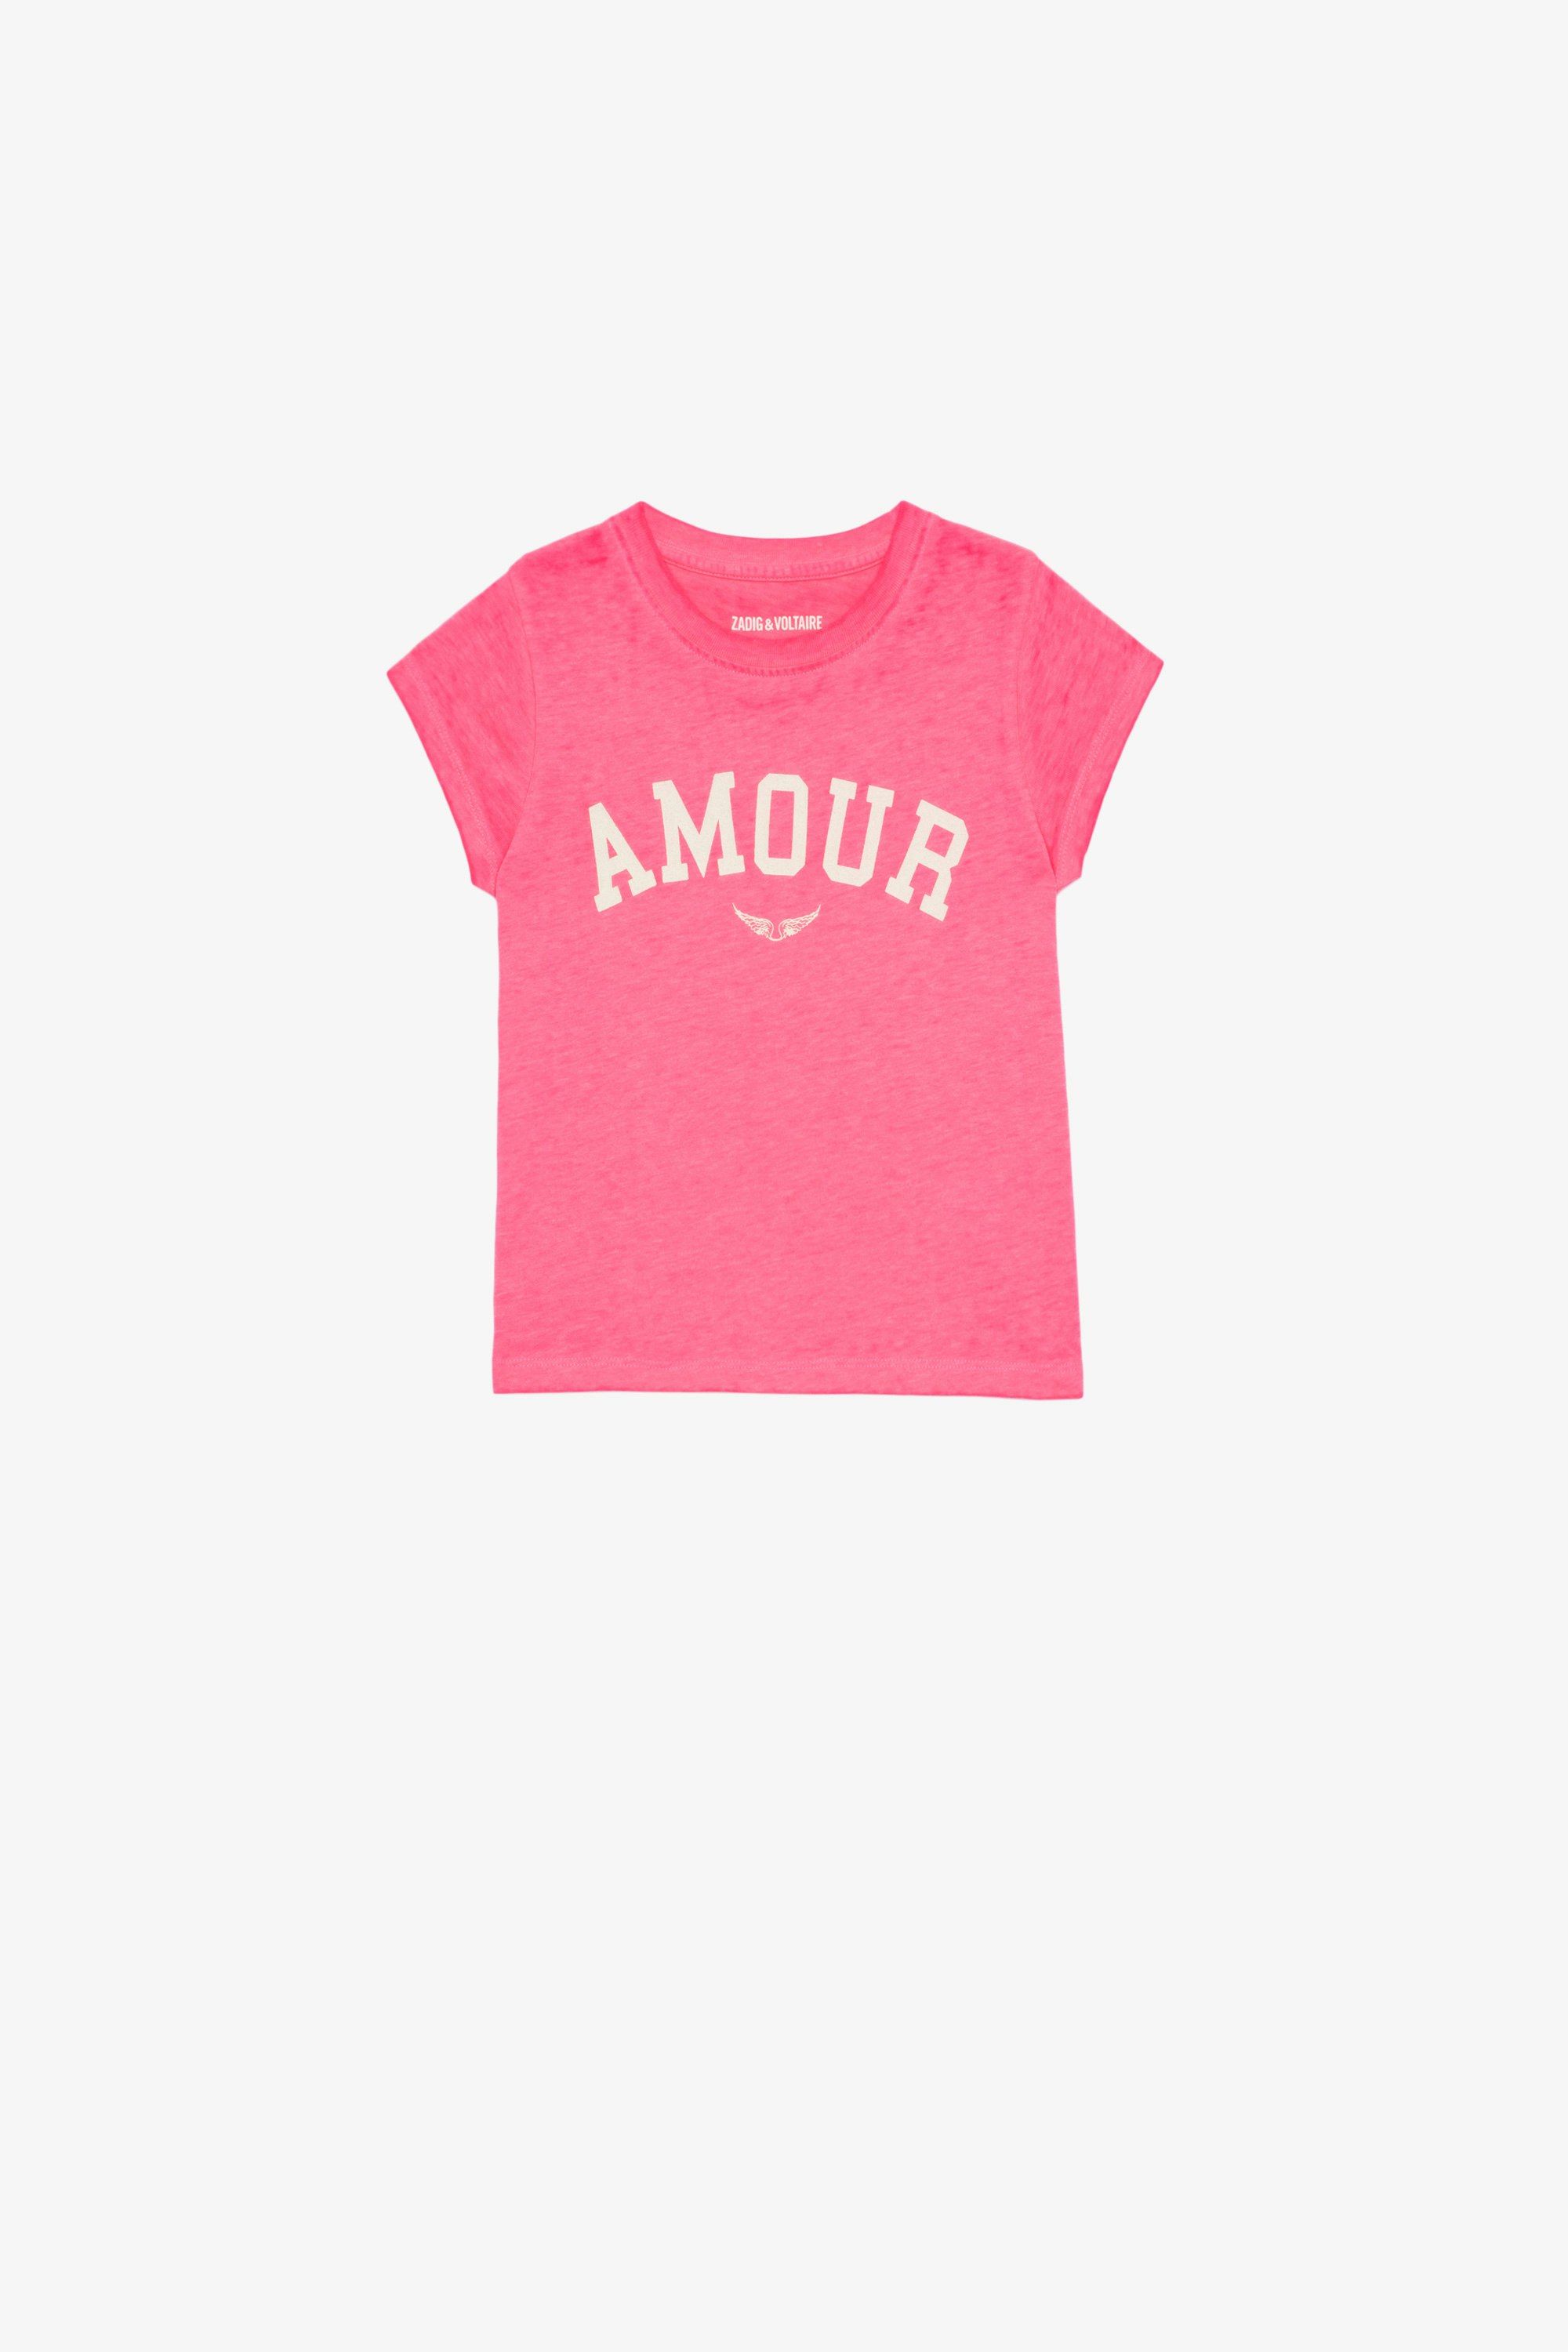 Kinder-T-Shirt Niels Kinder-T-Shirt aus rosafarbenem Baumwolljersey mit „Armour“-Aufdruck